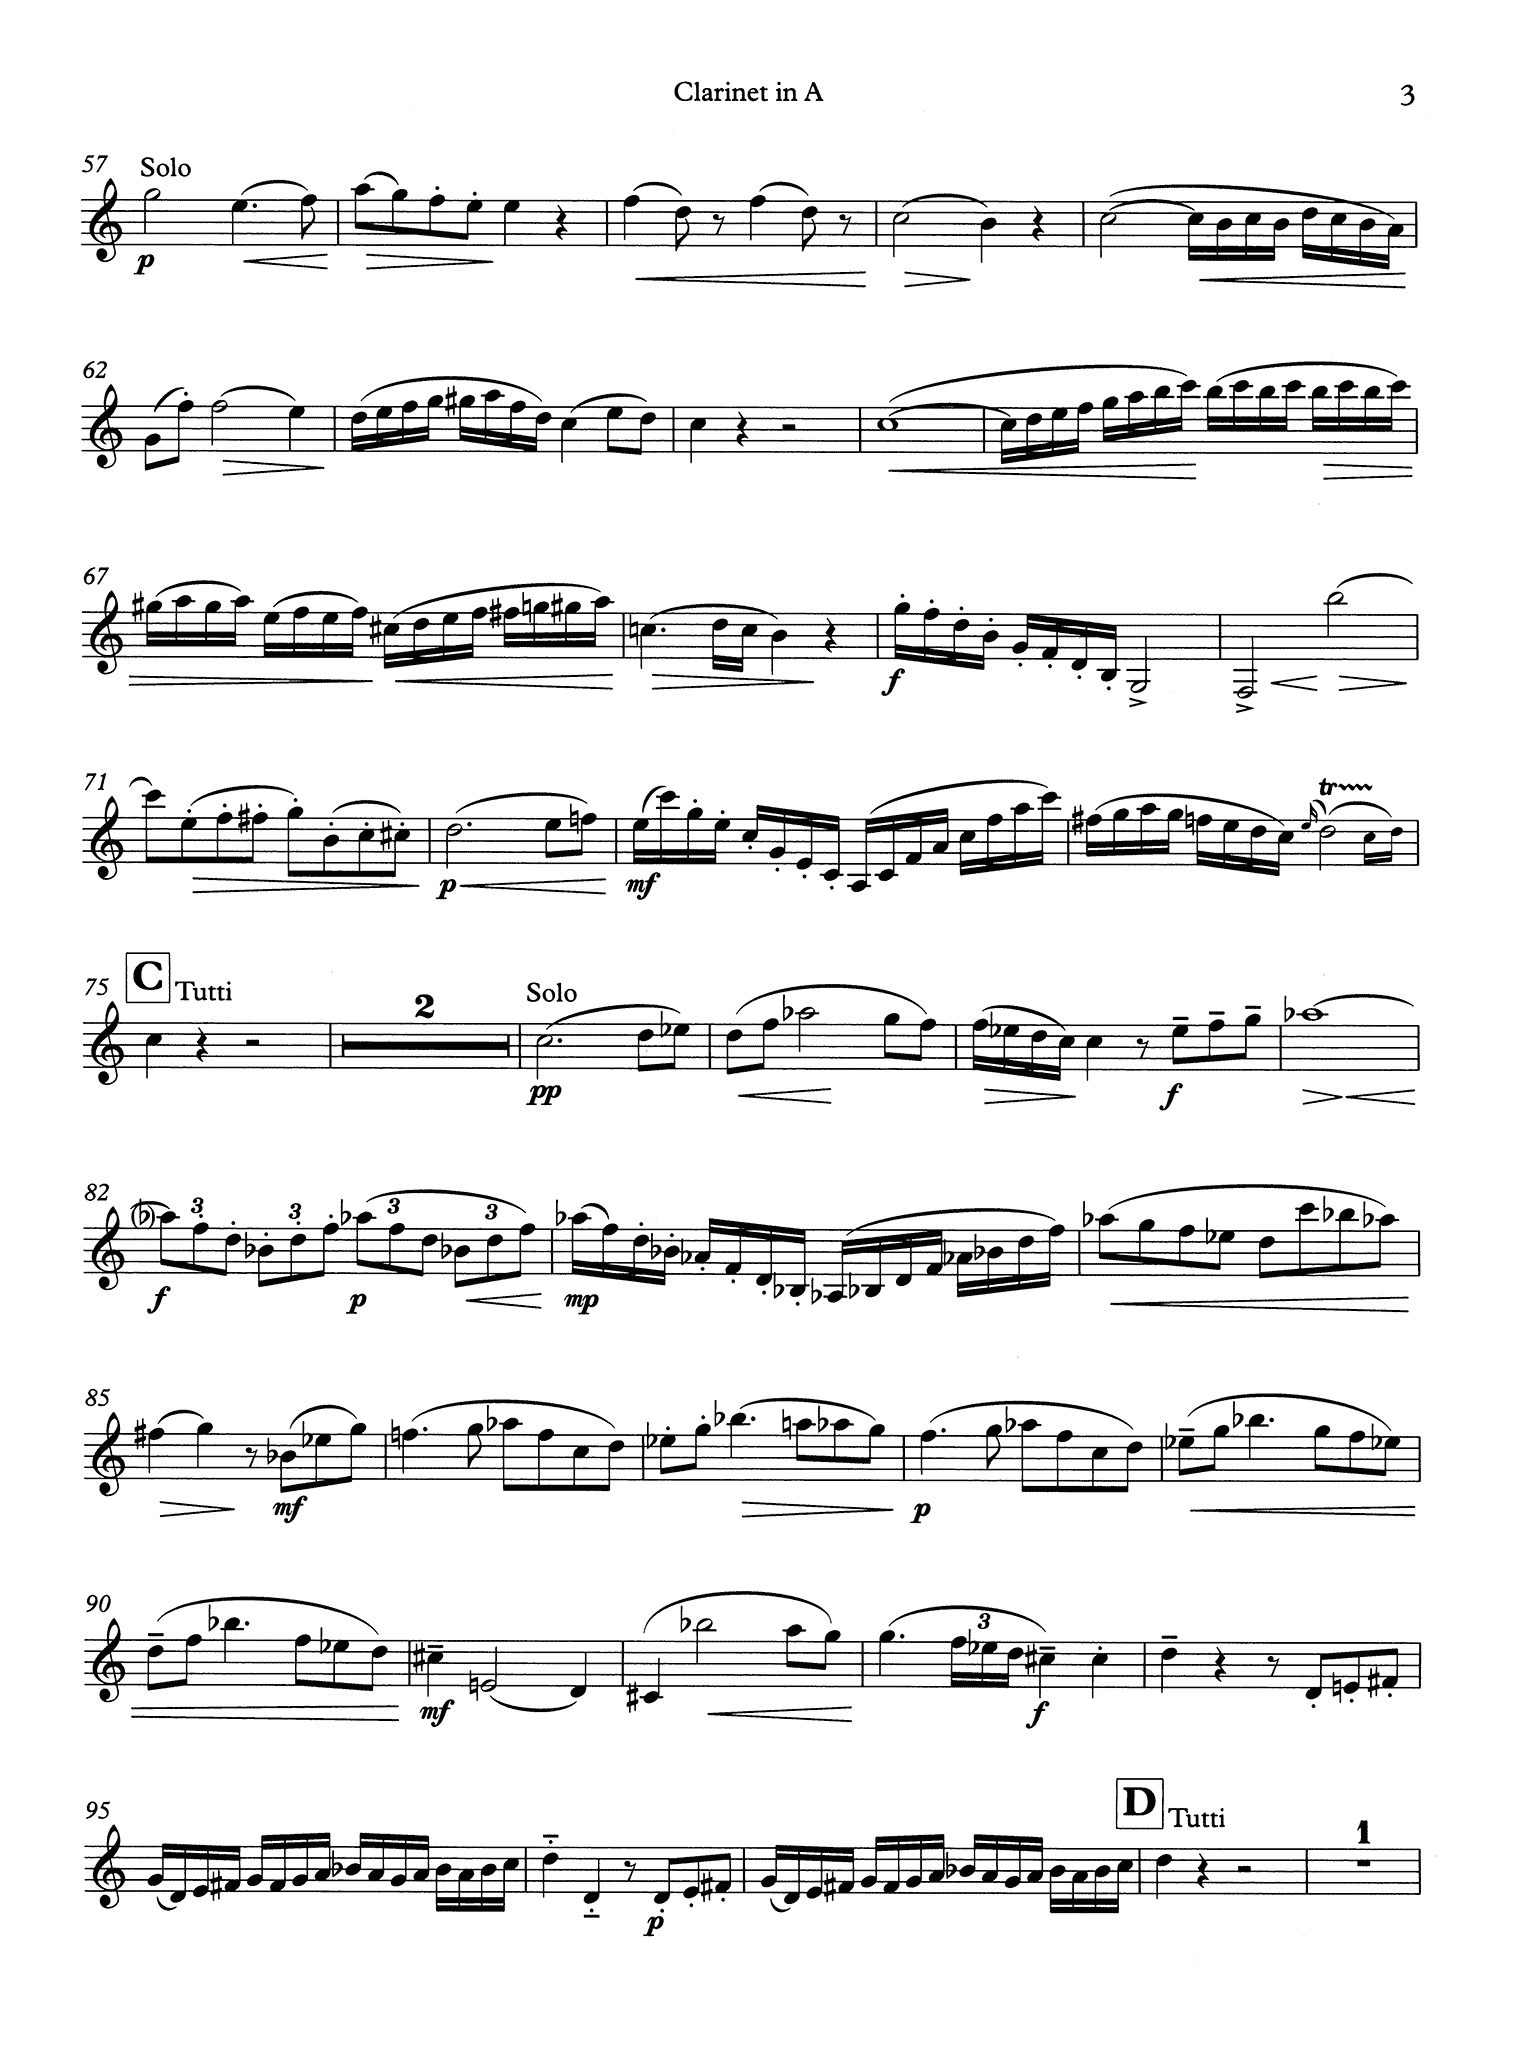 Clarinet Concerto in A Major, K. 622 A Clarinet part